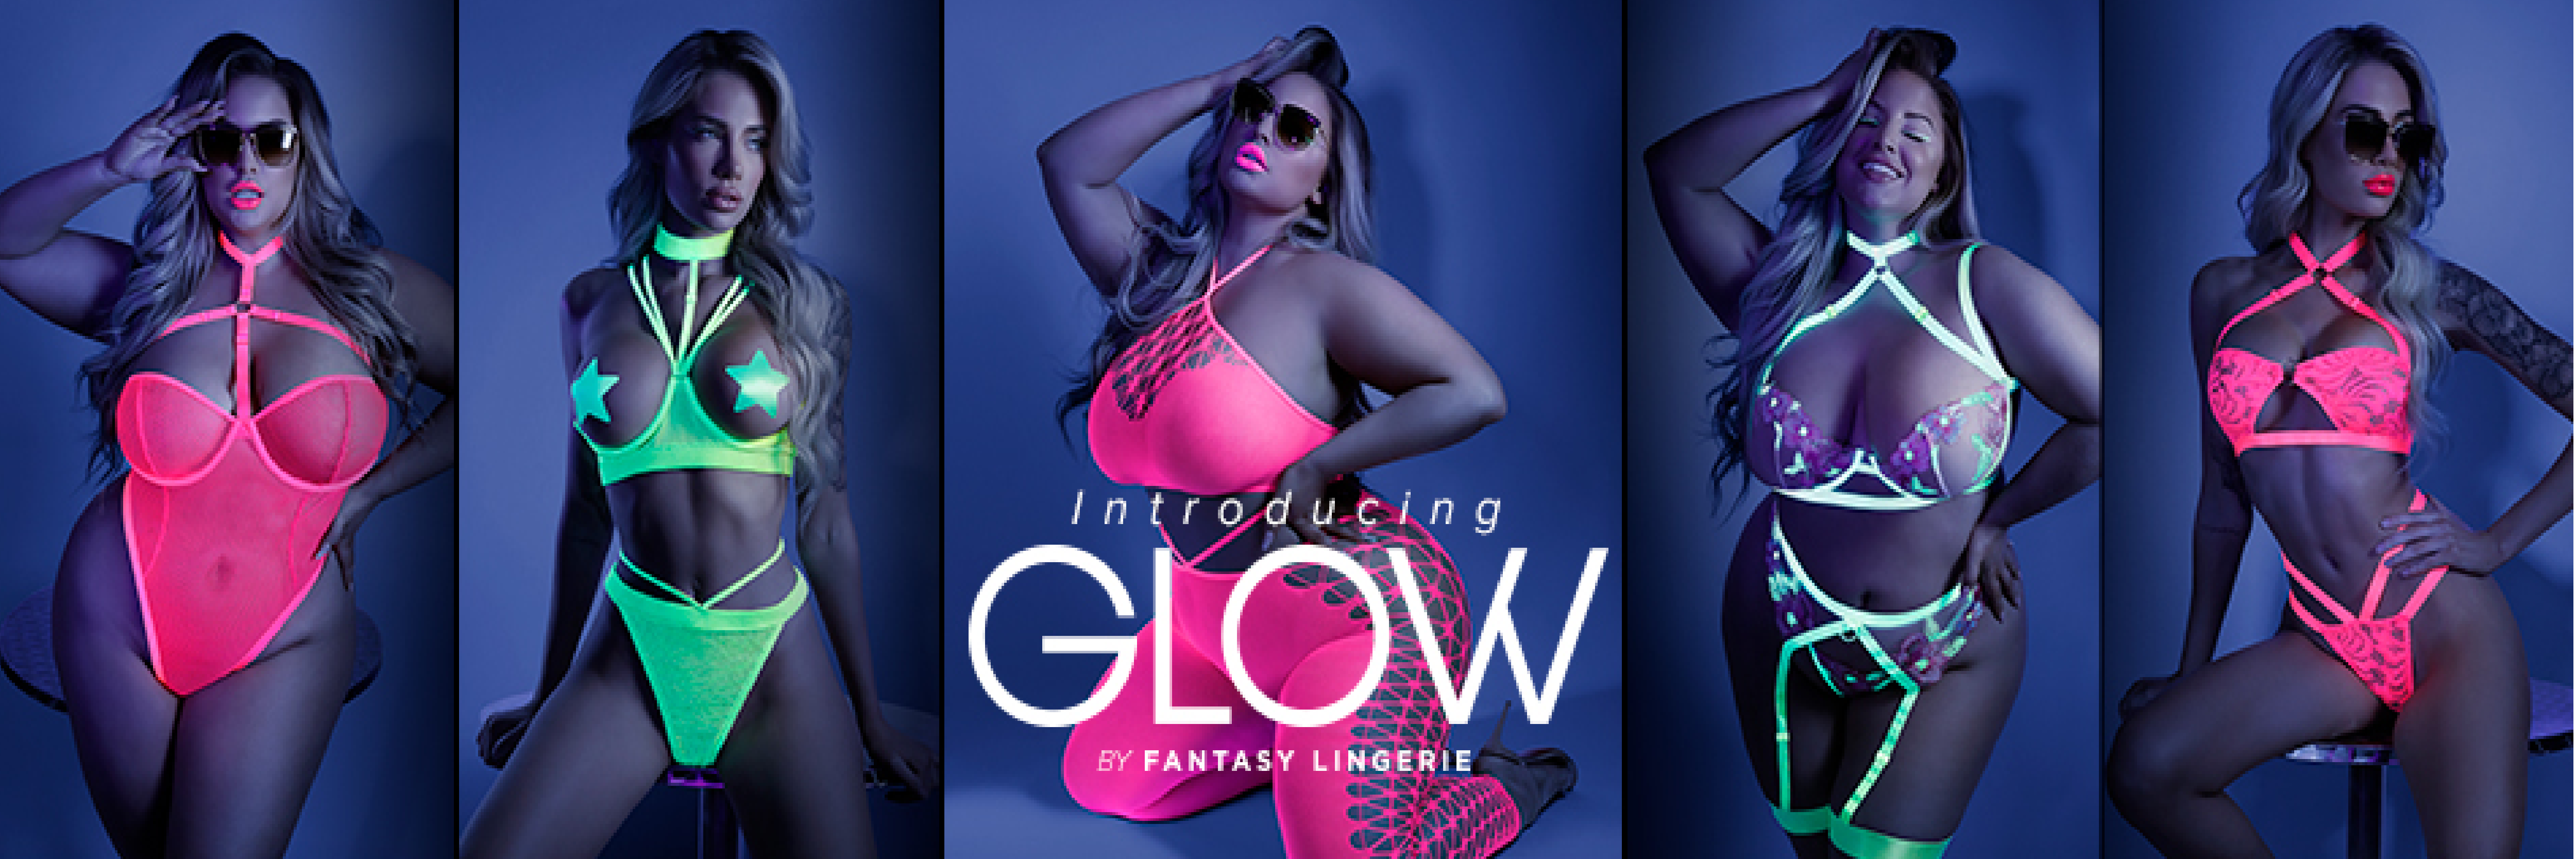 glow_fantasy_lingerie